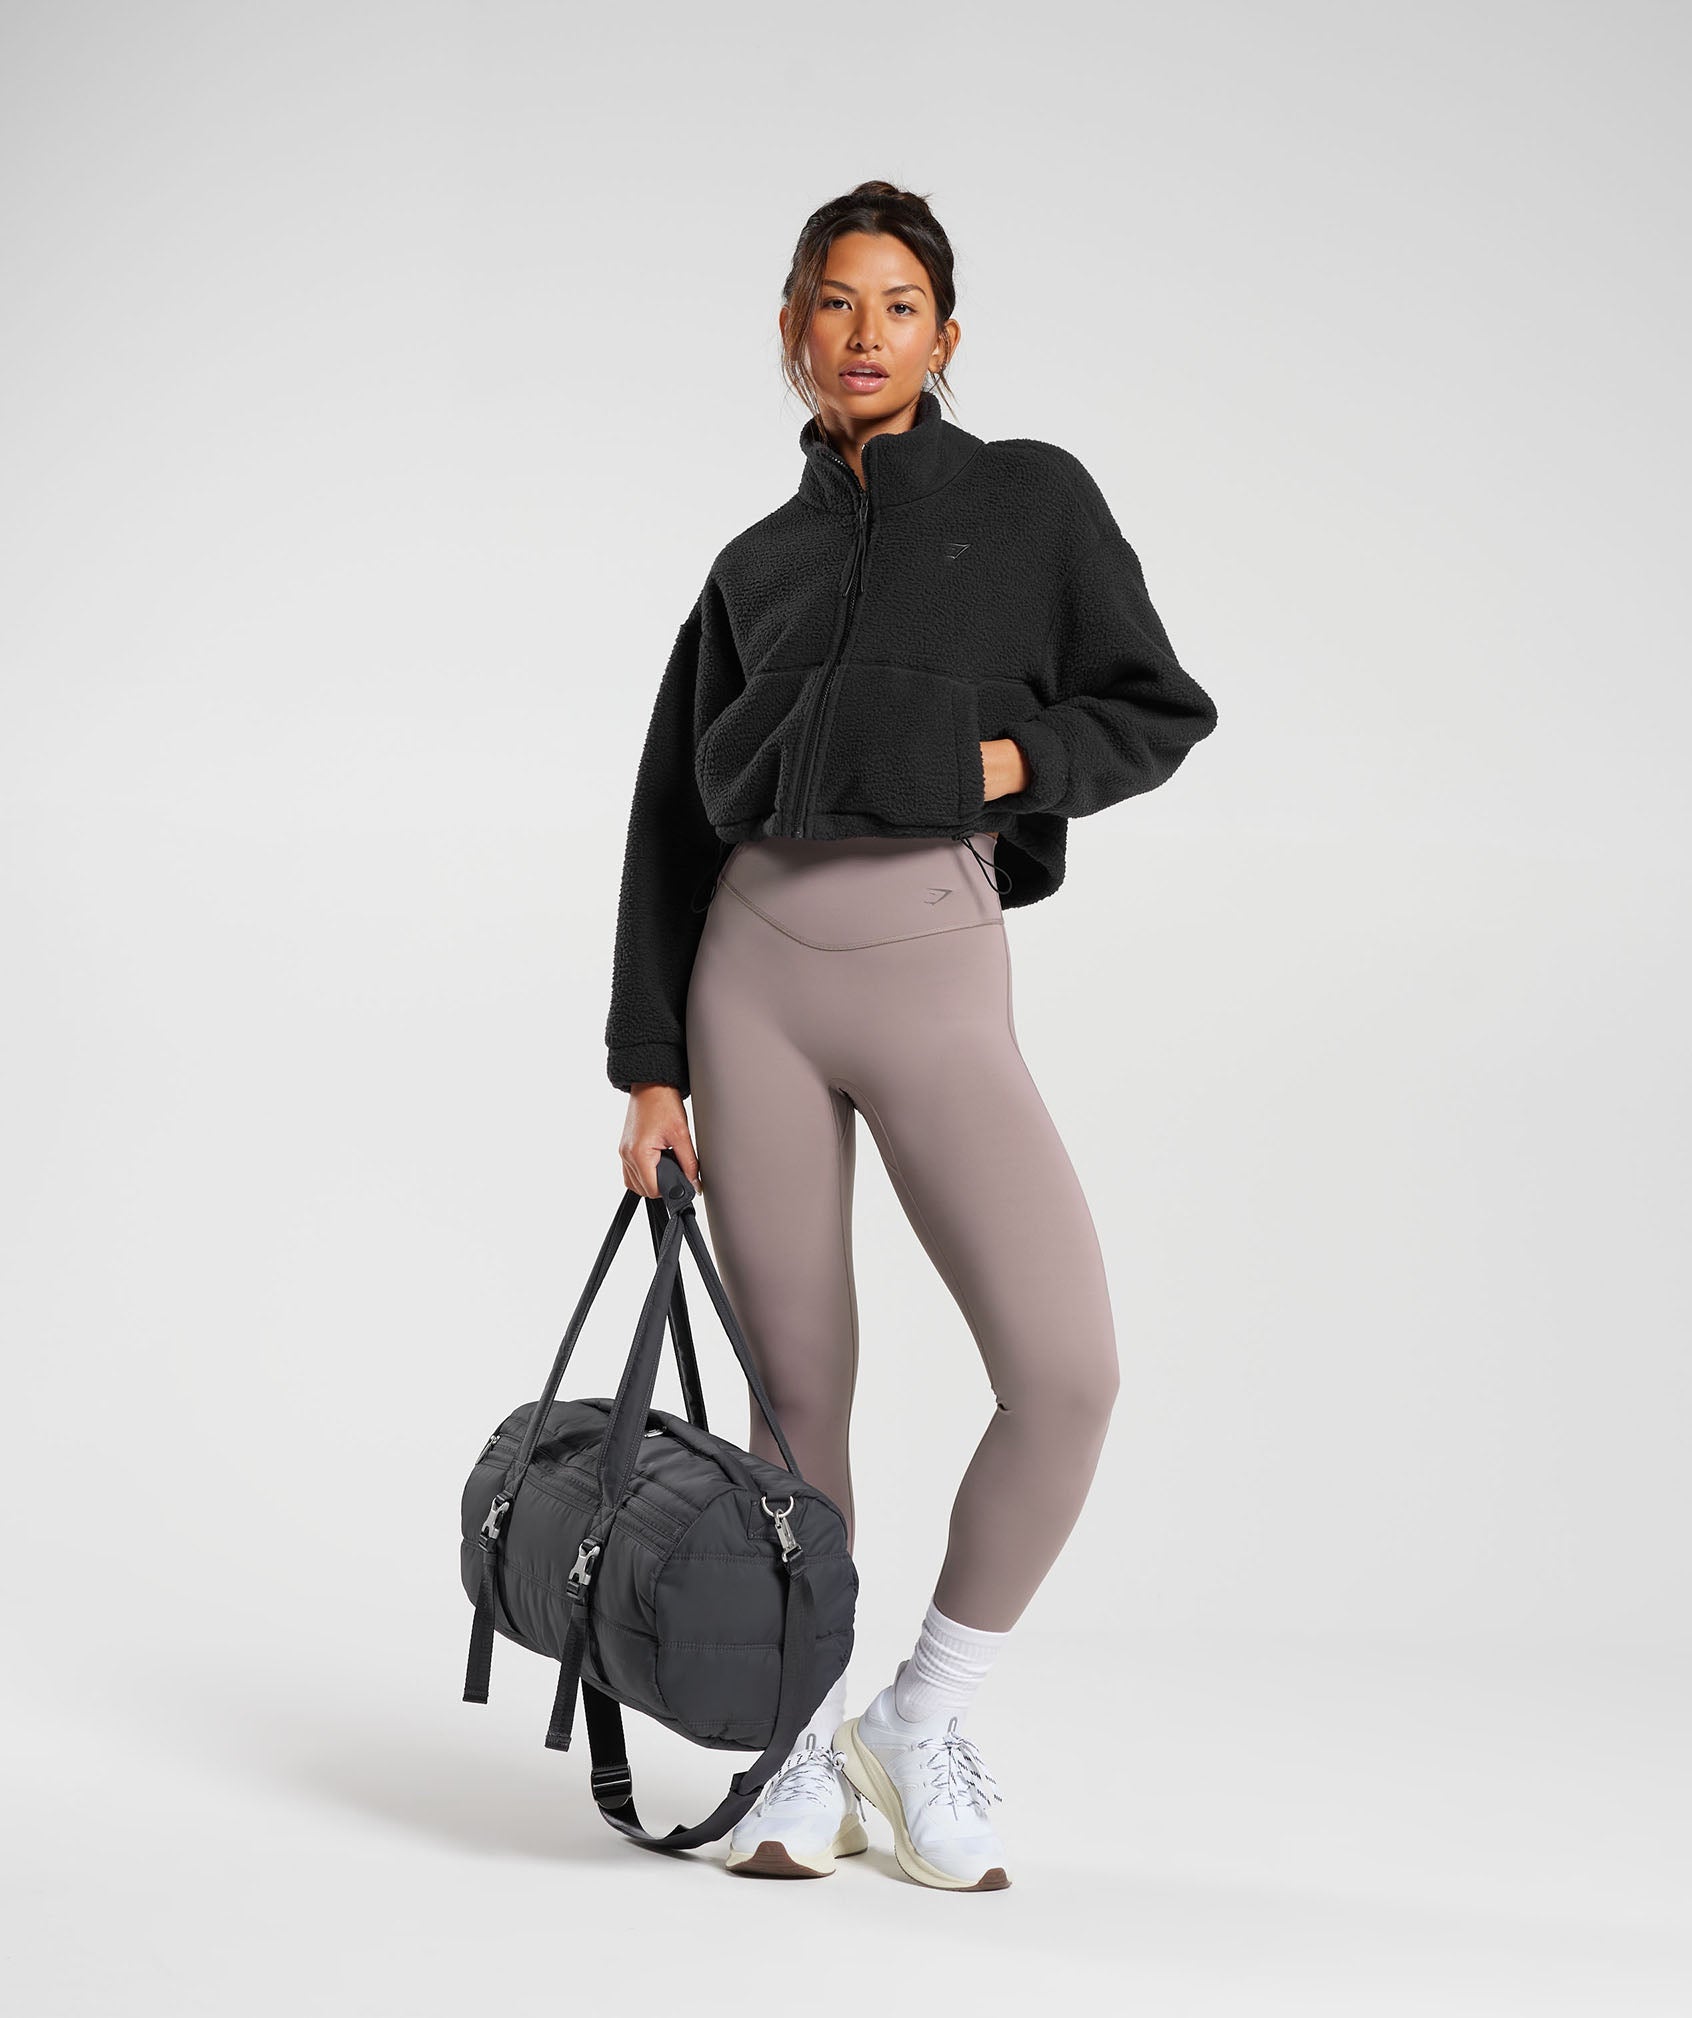 GYMSHARK Womens Sherpa Reversible Fleece Jacket, Black, Medium [Variation]  : : Fashion